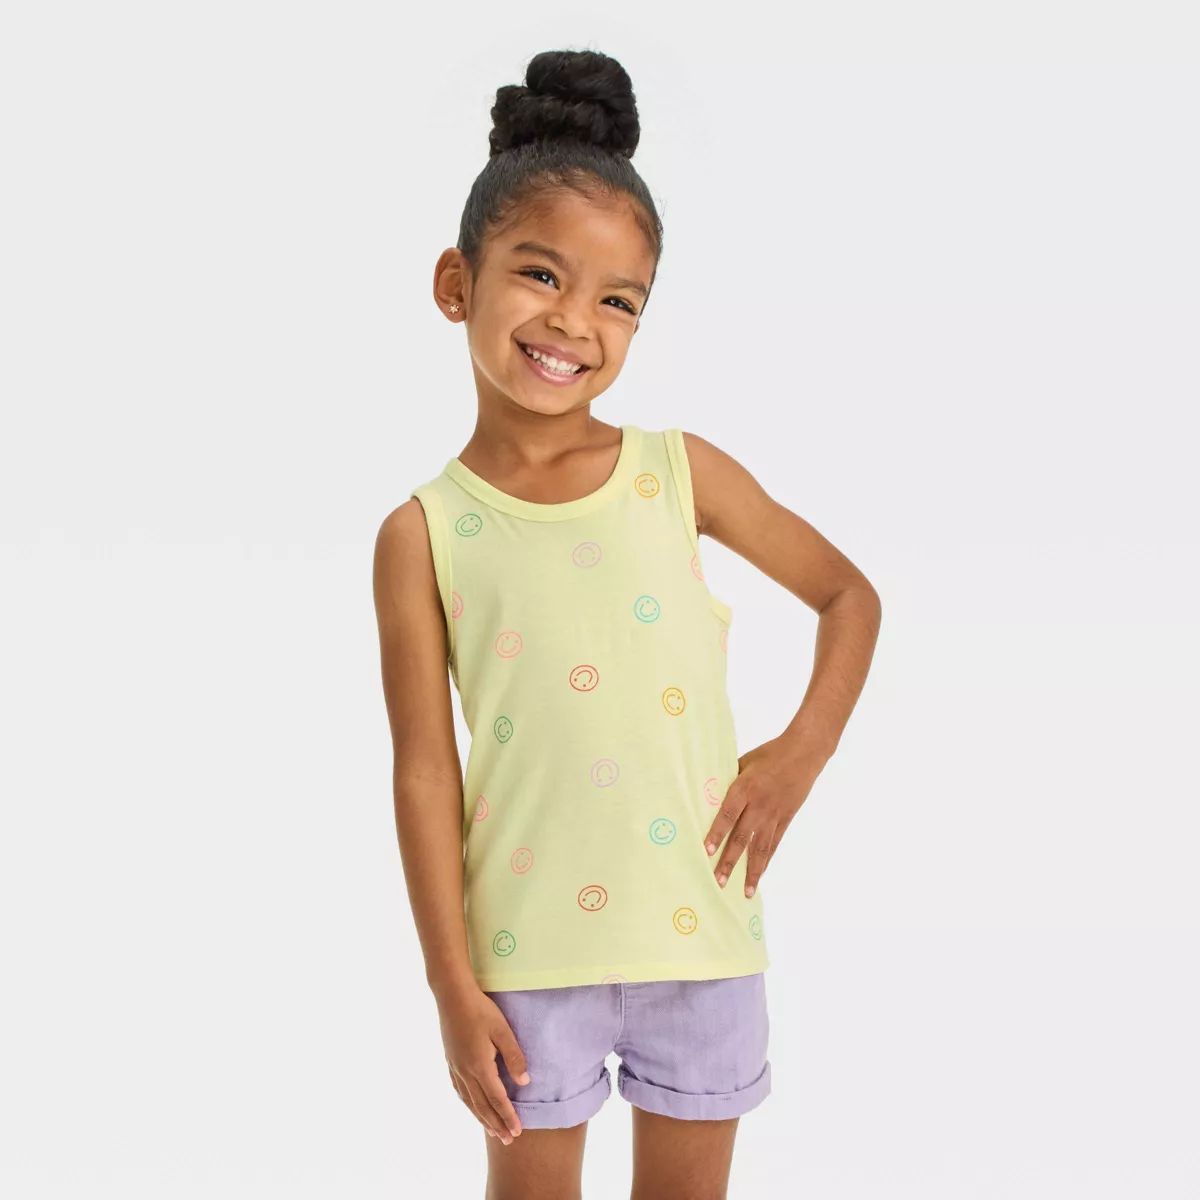 Toddler Girls' Smiles Tank Top - Cat & Jack™ Light Yellow | Target